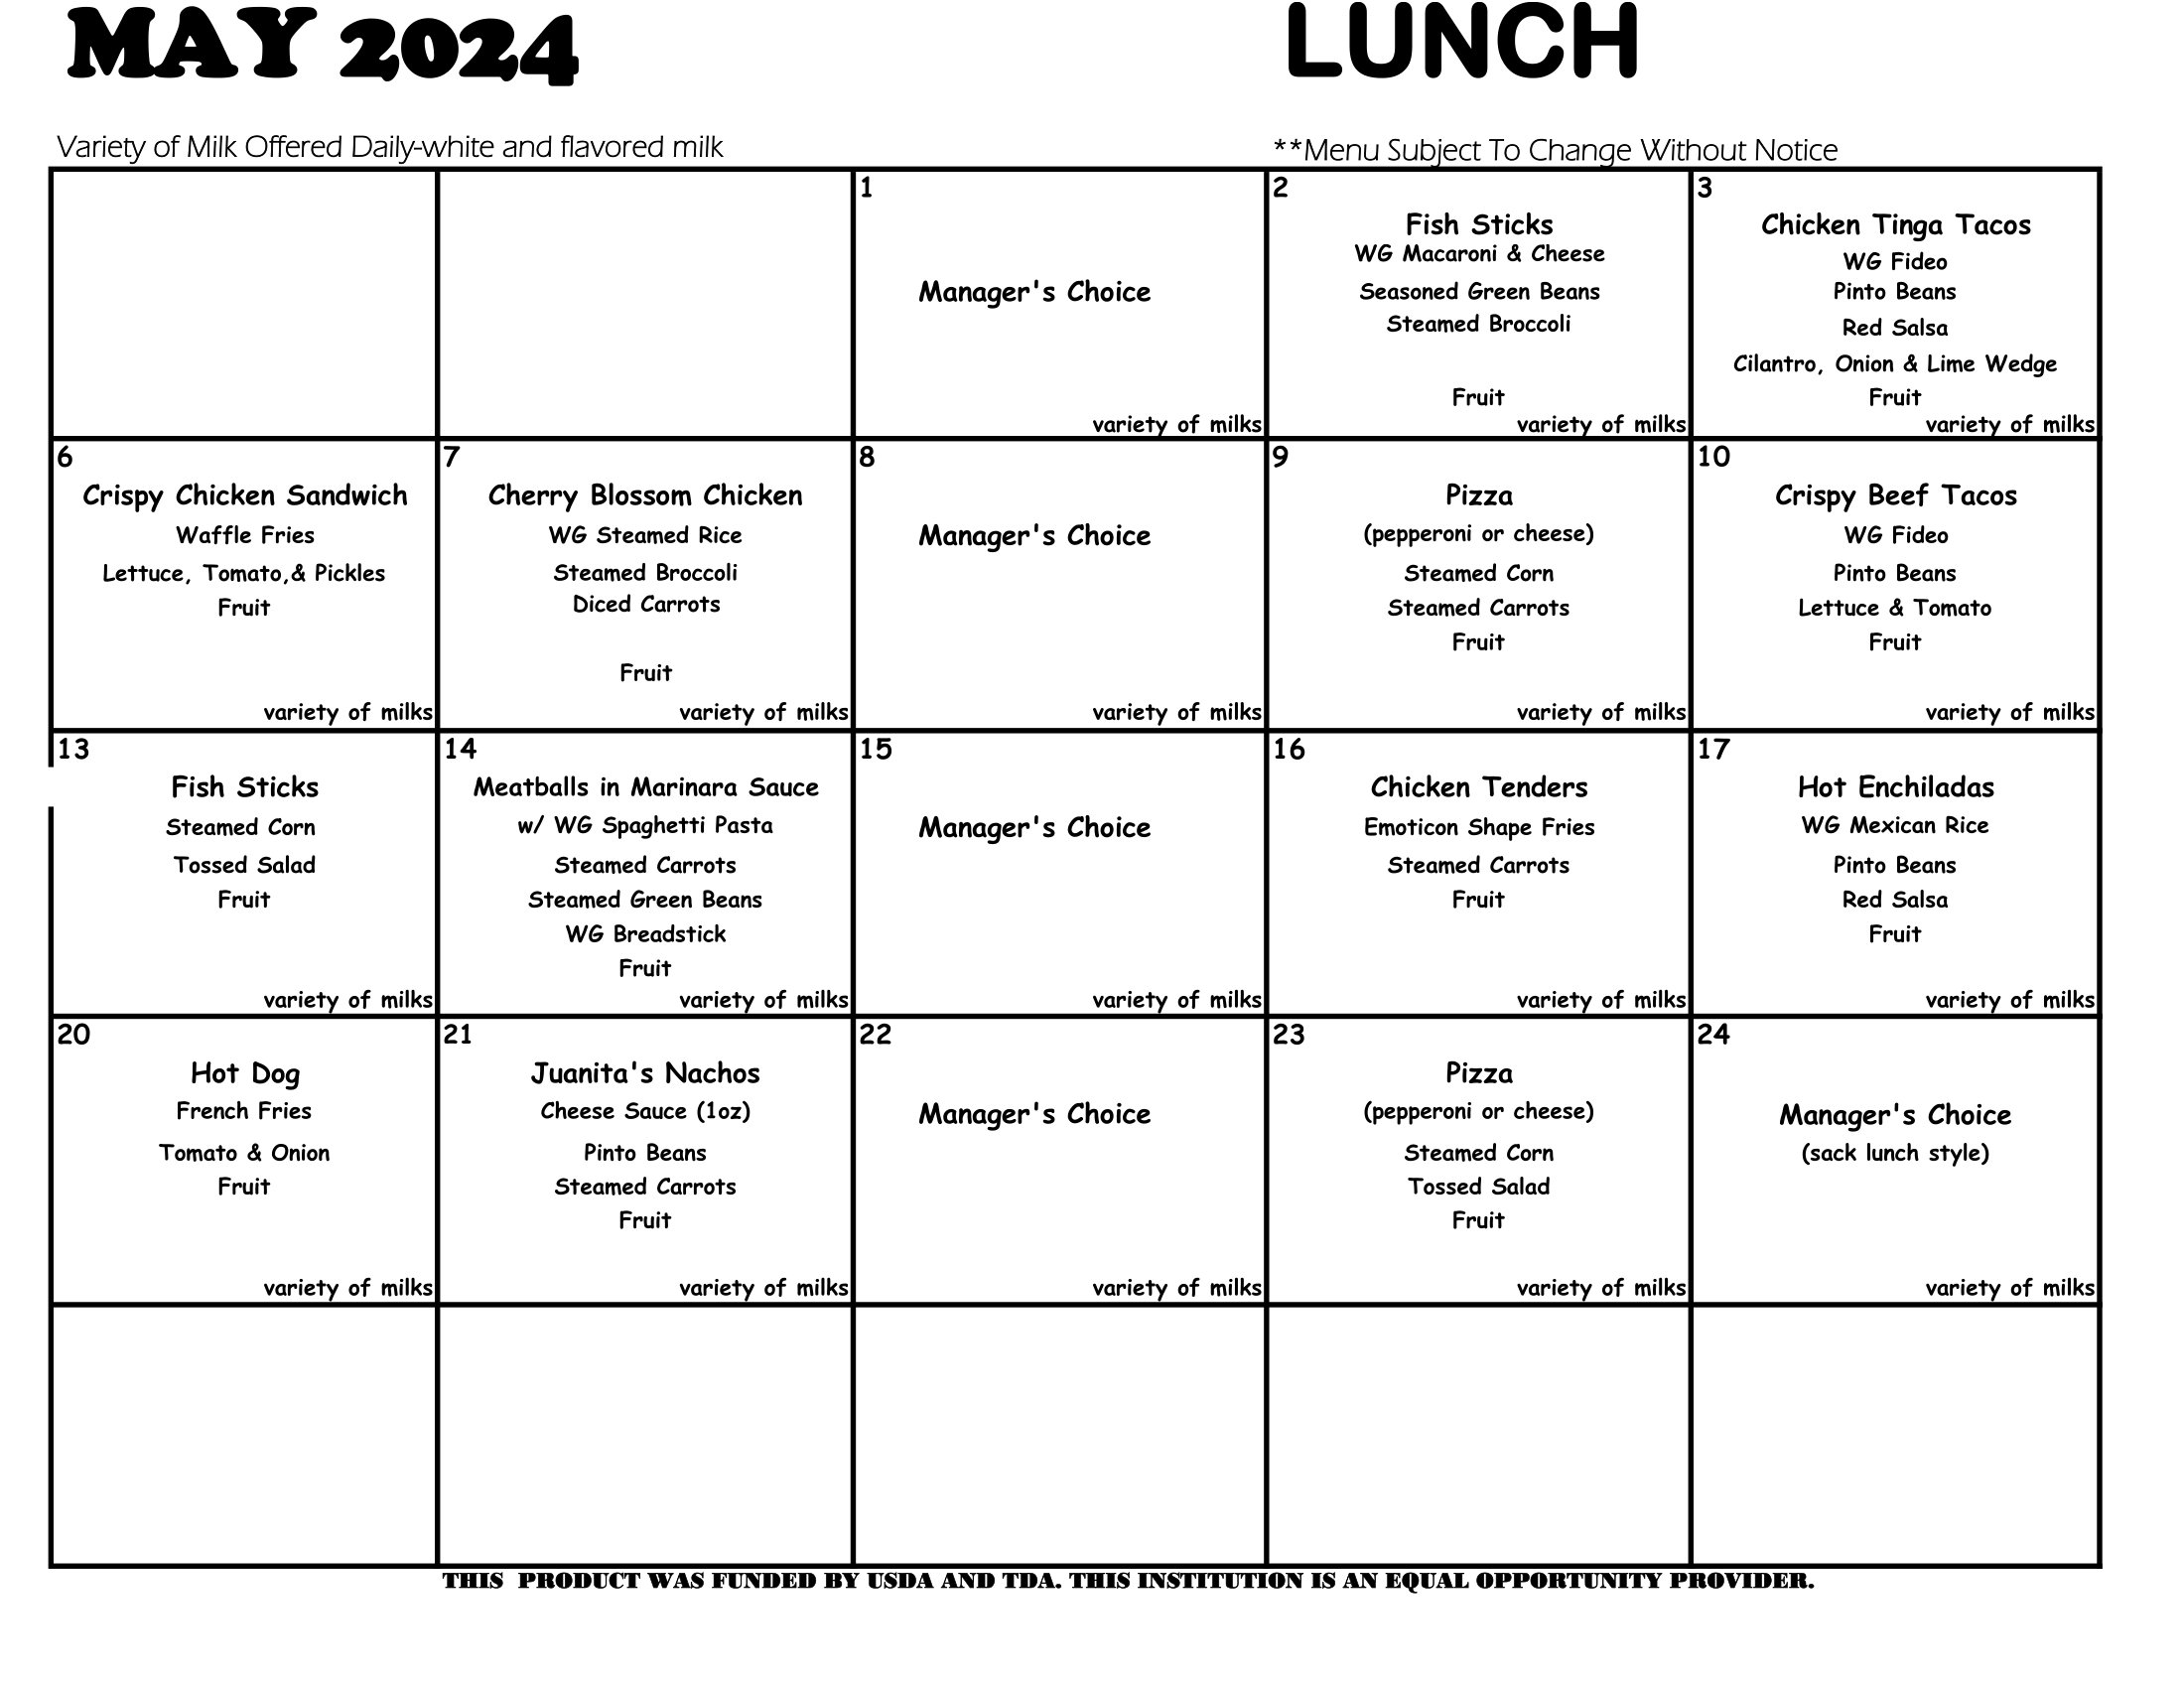 May 2024 lunch menus